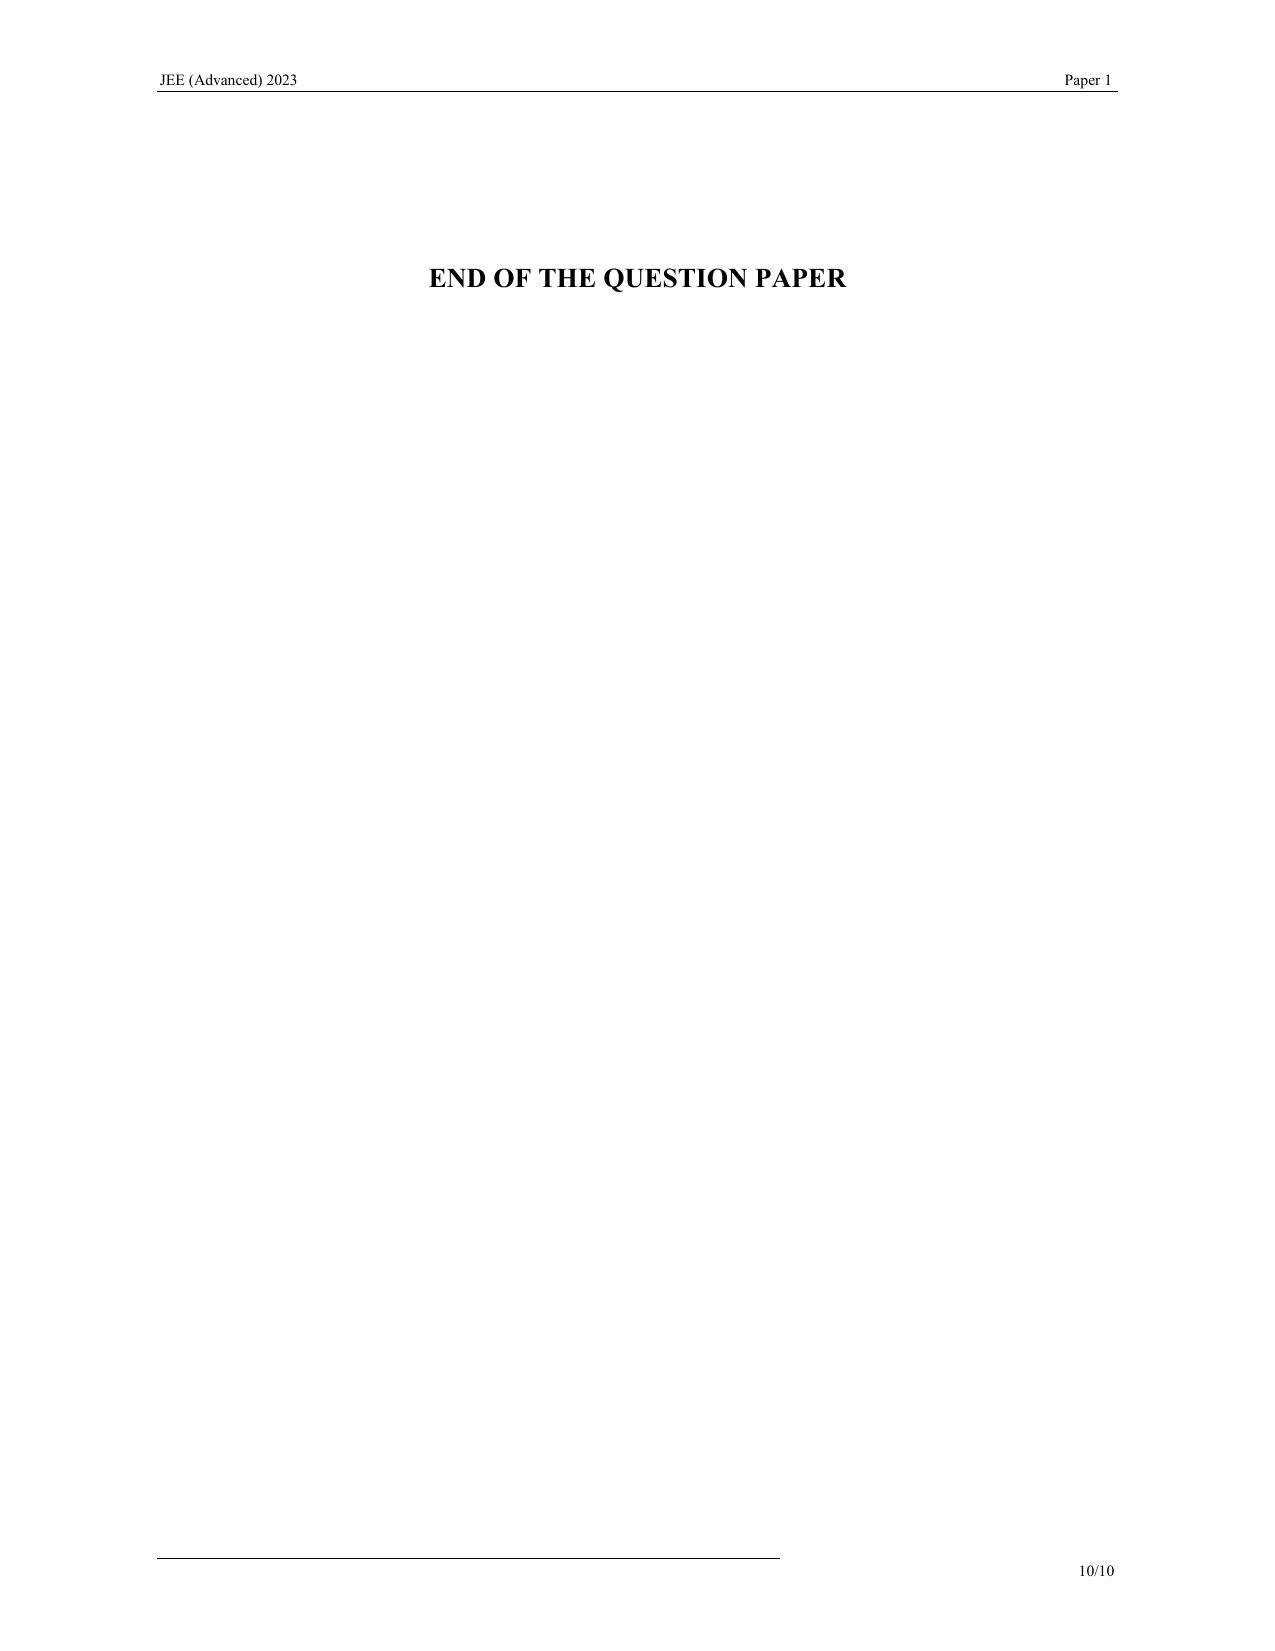 JEE (Advanced) 2023 Paper I - Mathematics Question Paper - Page 10